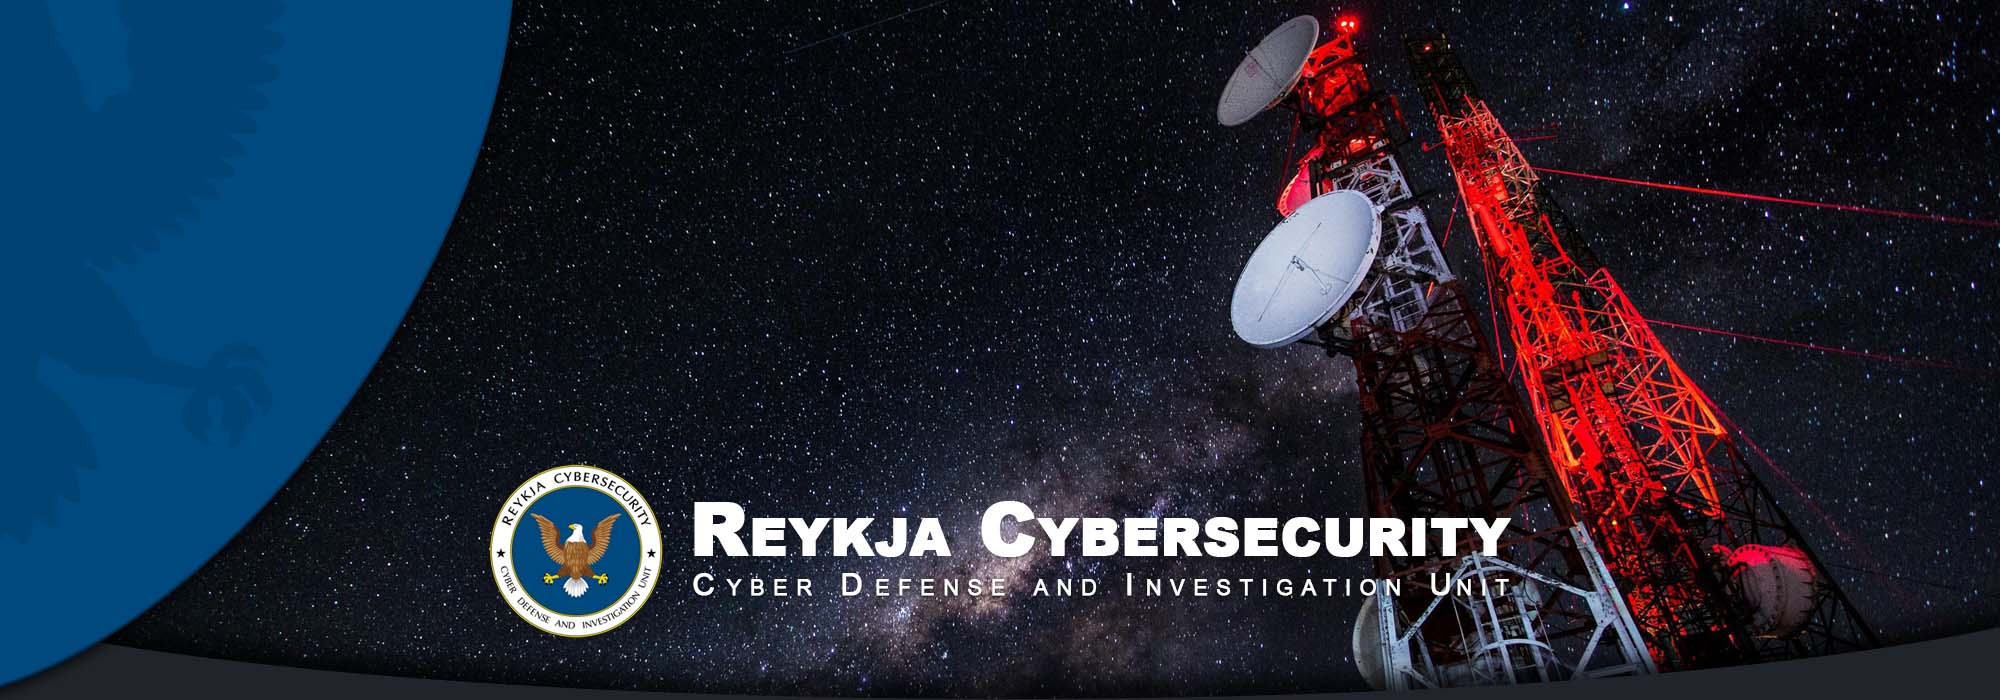 Reykja Cybersecurity main image